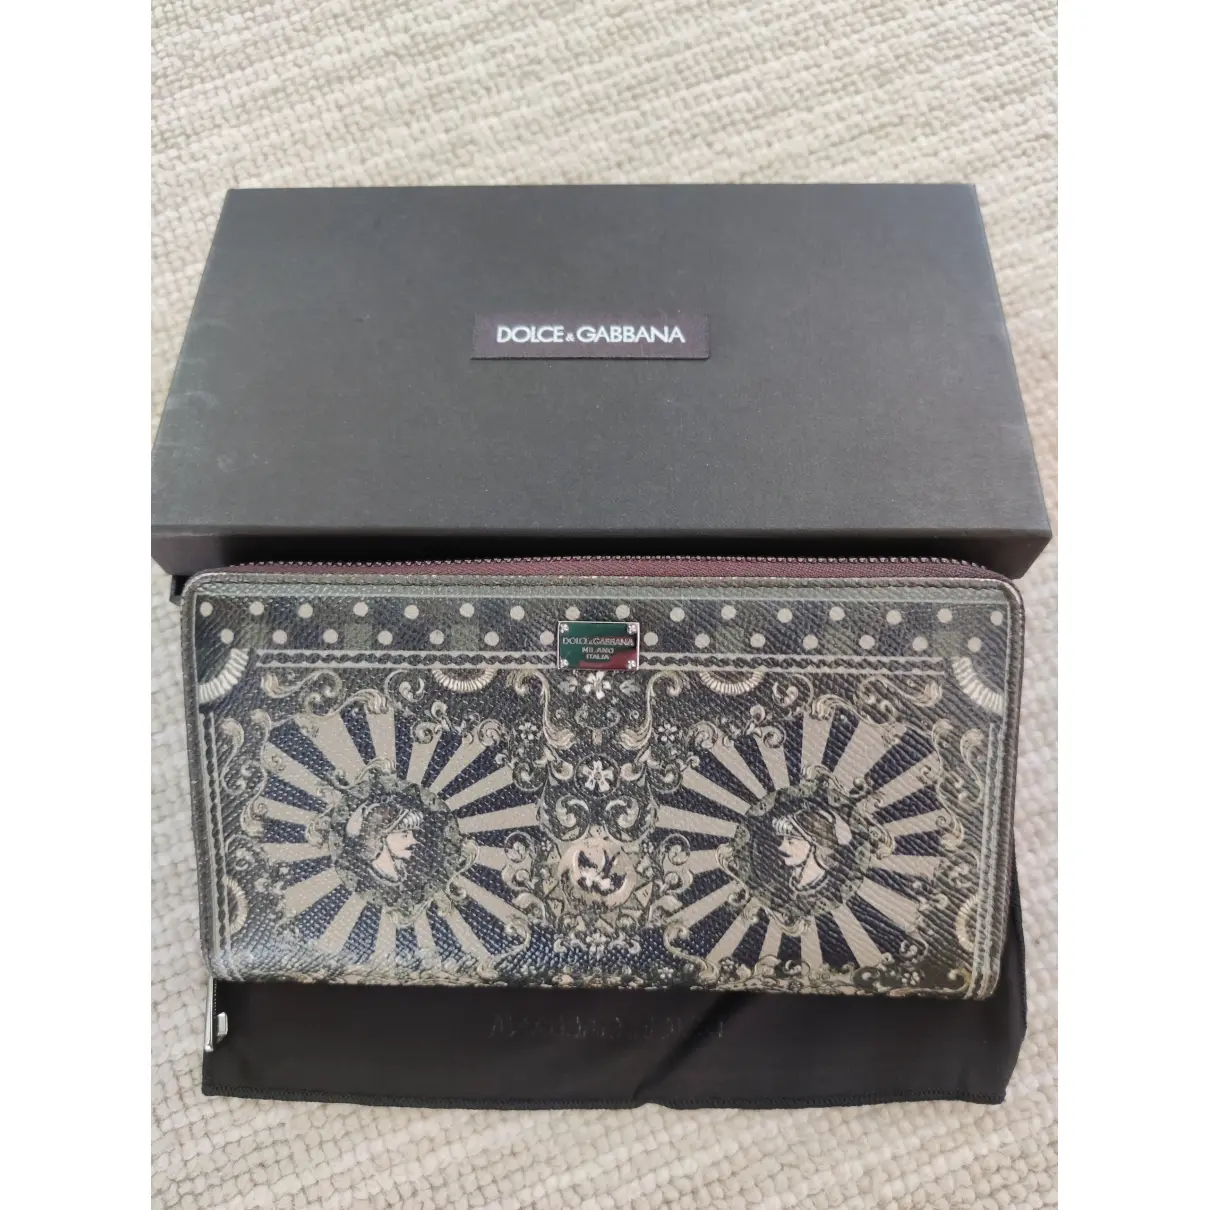 Buy Dolce & Gabbana Leather wallet online